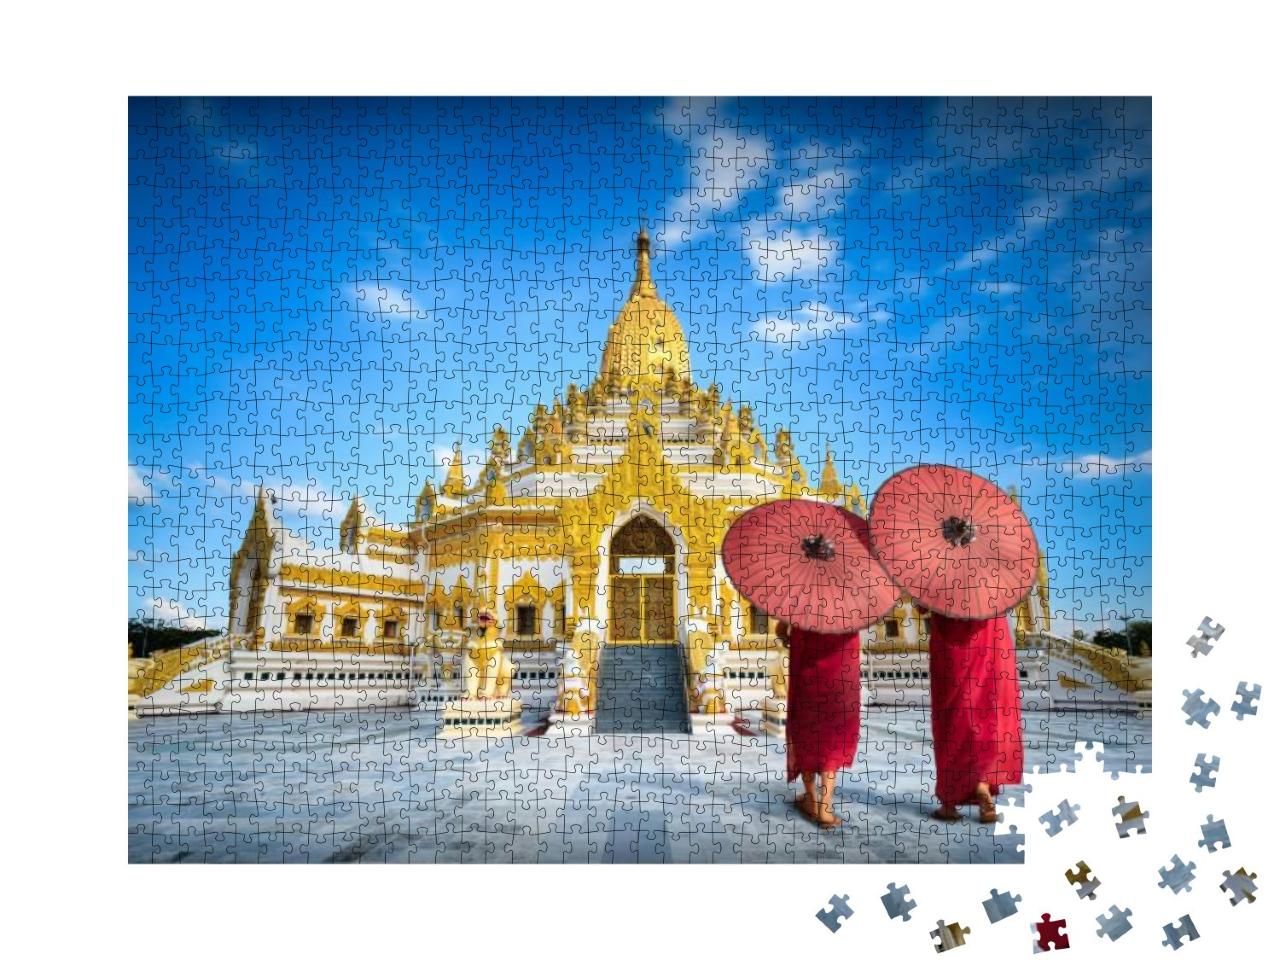 Swe Taw Myat Buddha Tooth Relic Pagoda, Yangon Myanmar... Jigsaw Puzzle with 1000 pieces